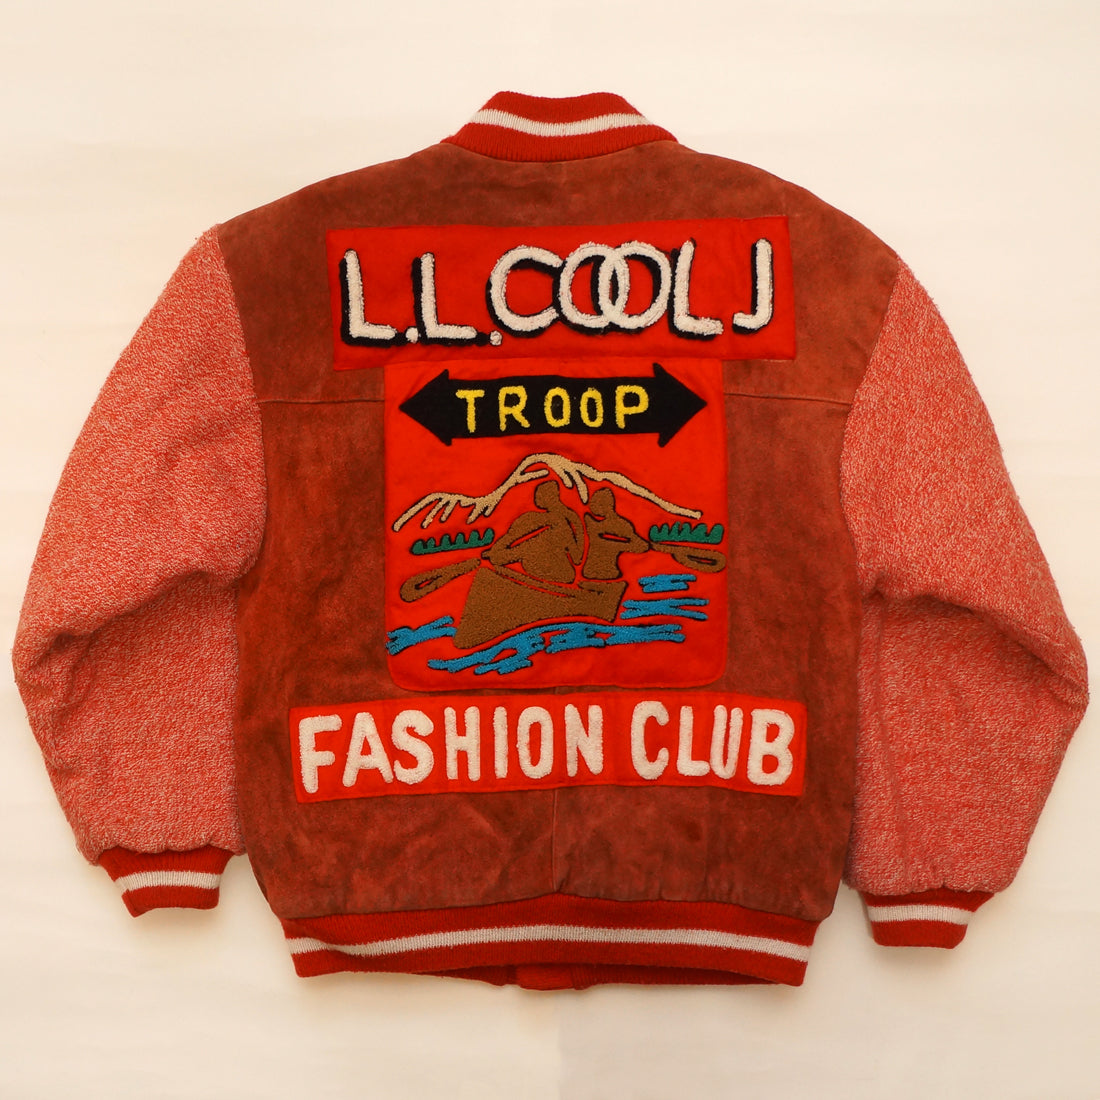 Vintage Leather "L.L. Cool J" Fashion Club Troop Jacket